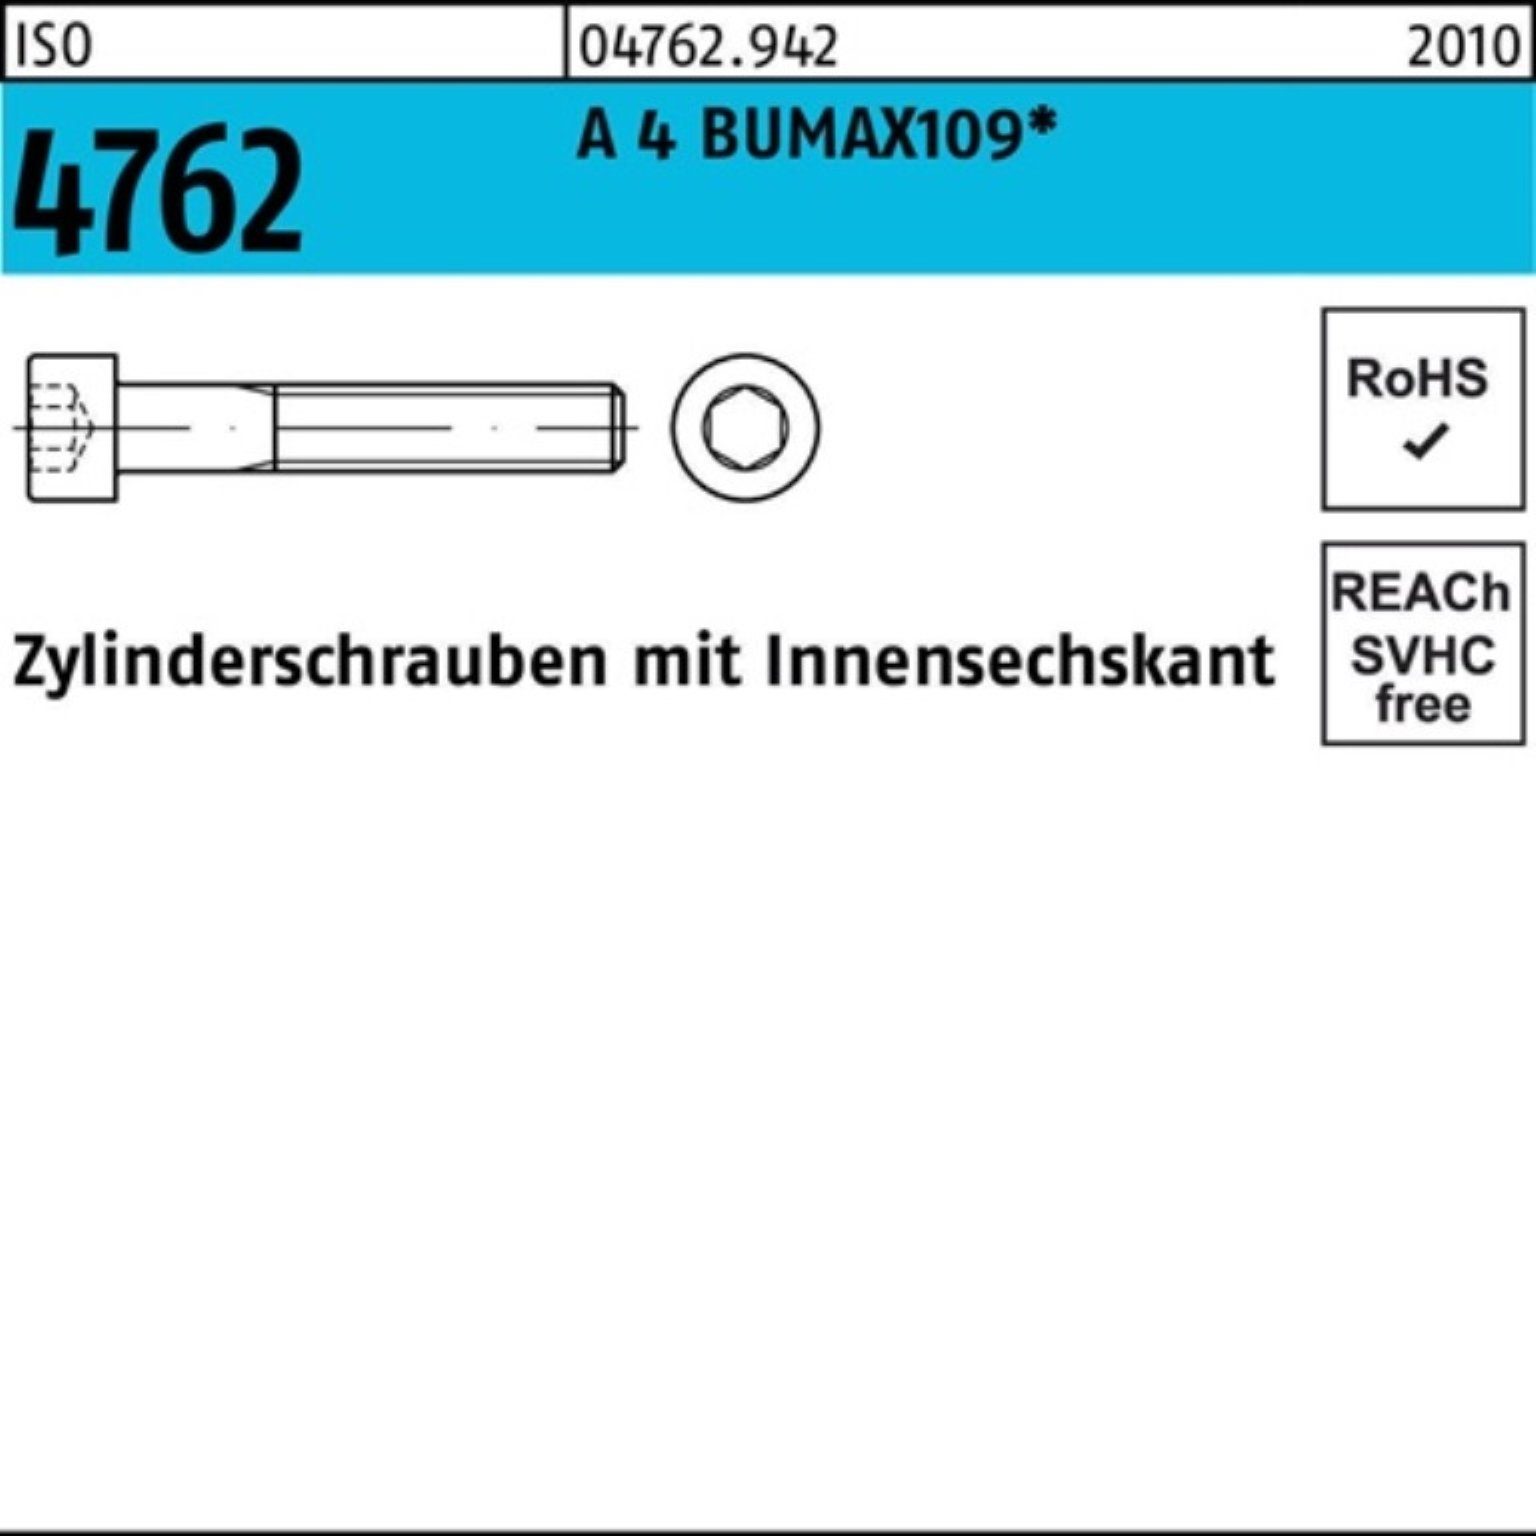 Bufab Zylinderschraube 100er Pack 60 4 BUMAX109 M10x 50 A ISO Innen-6kt 4762 Zylinderschraube